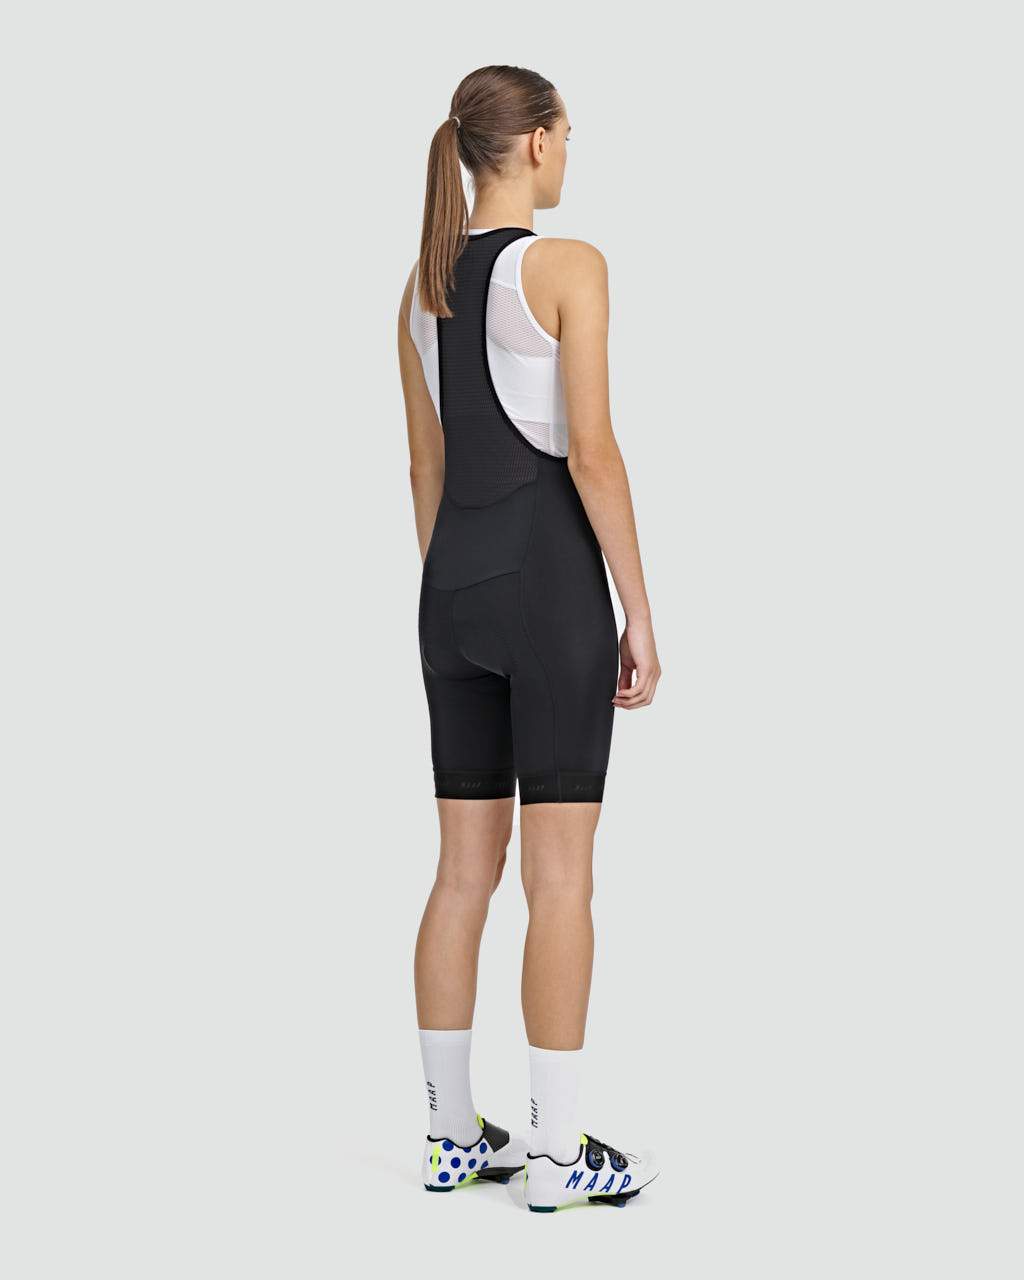 Female-Bib-Training-Black-WAB052_maap-cycling-apparel_PDP_SPECS_01_DESKTOP_VARIANT_02